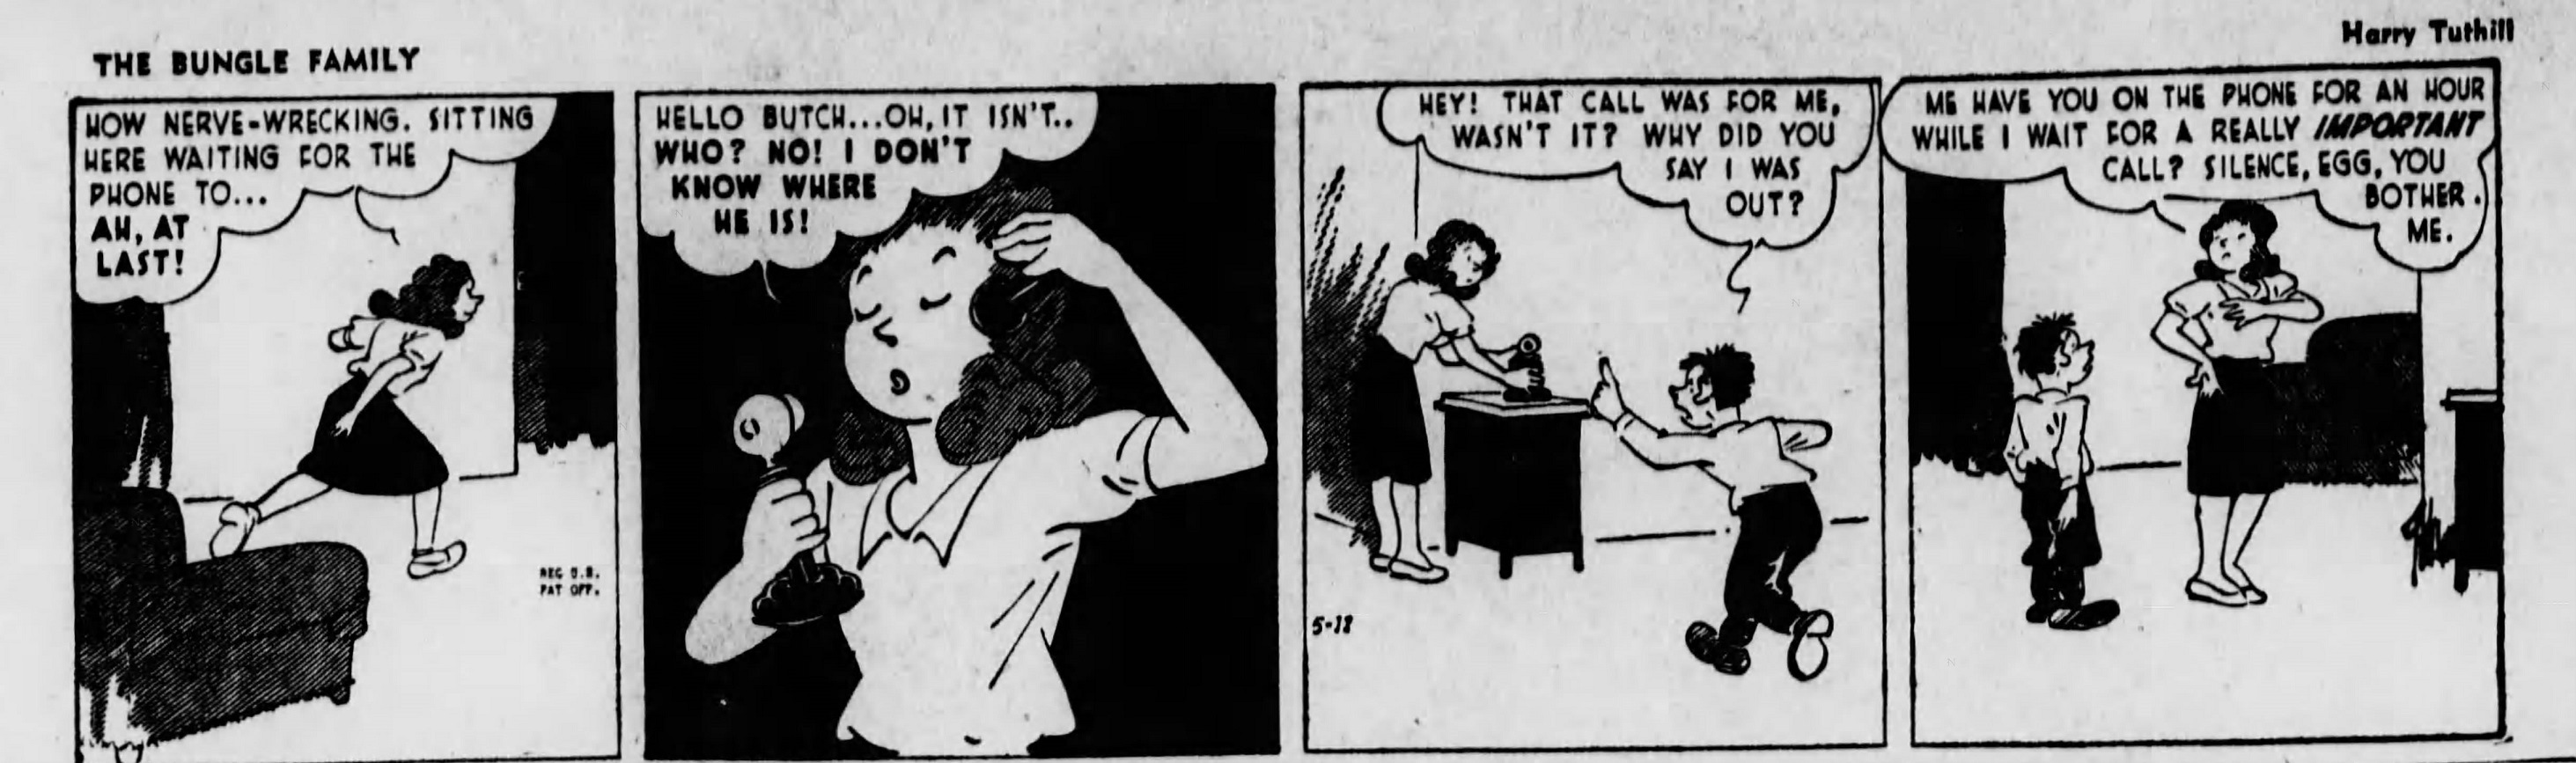 The_Brooklyn_Daily_Eagle_Tue__May_11__1943_(9).jpg